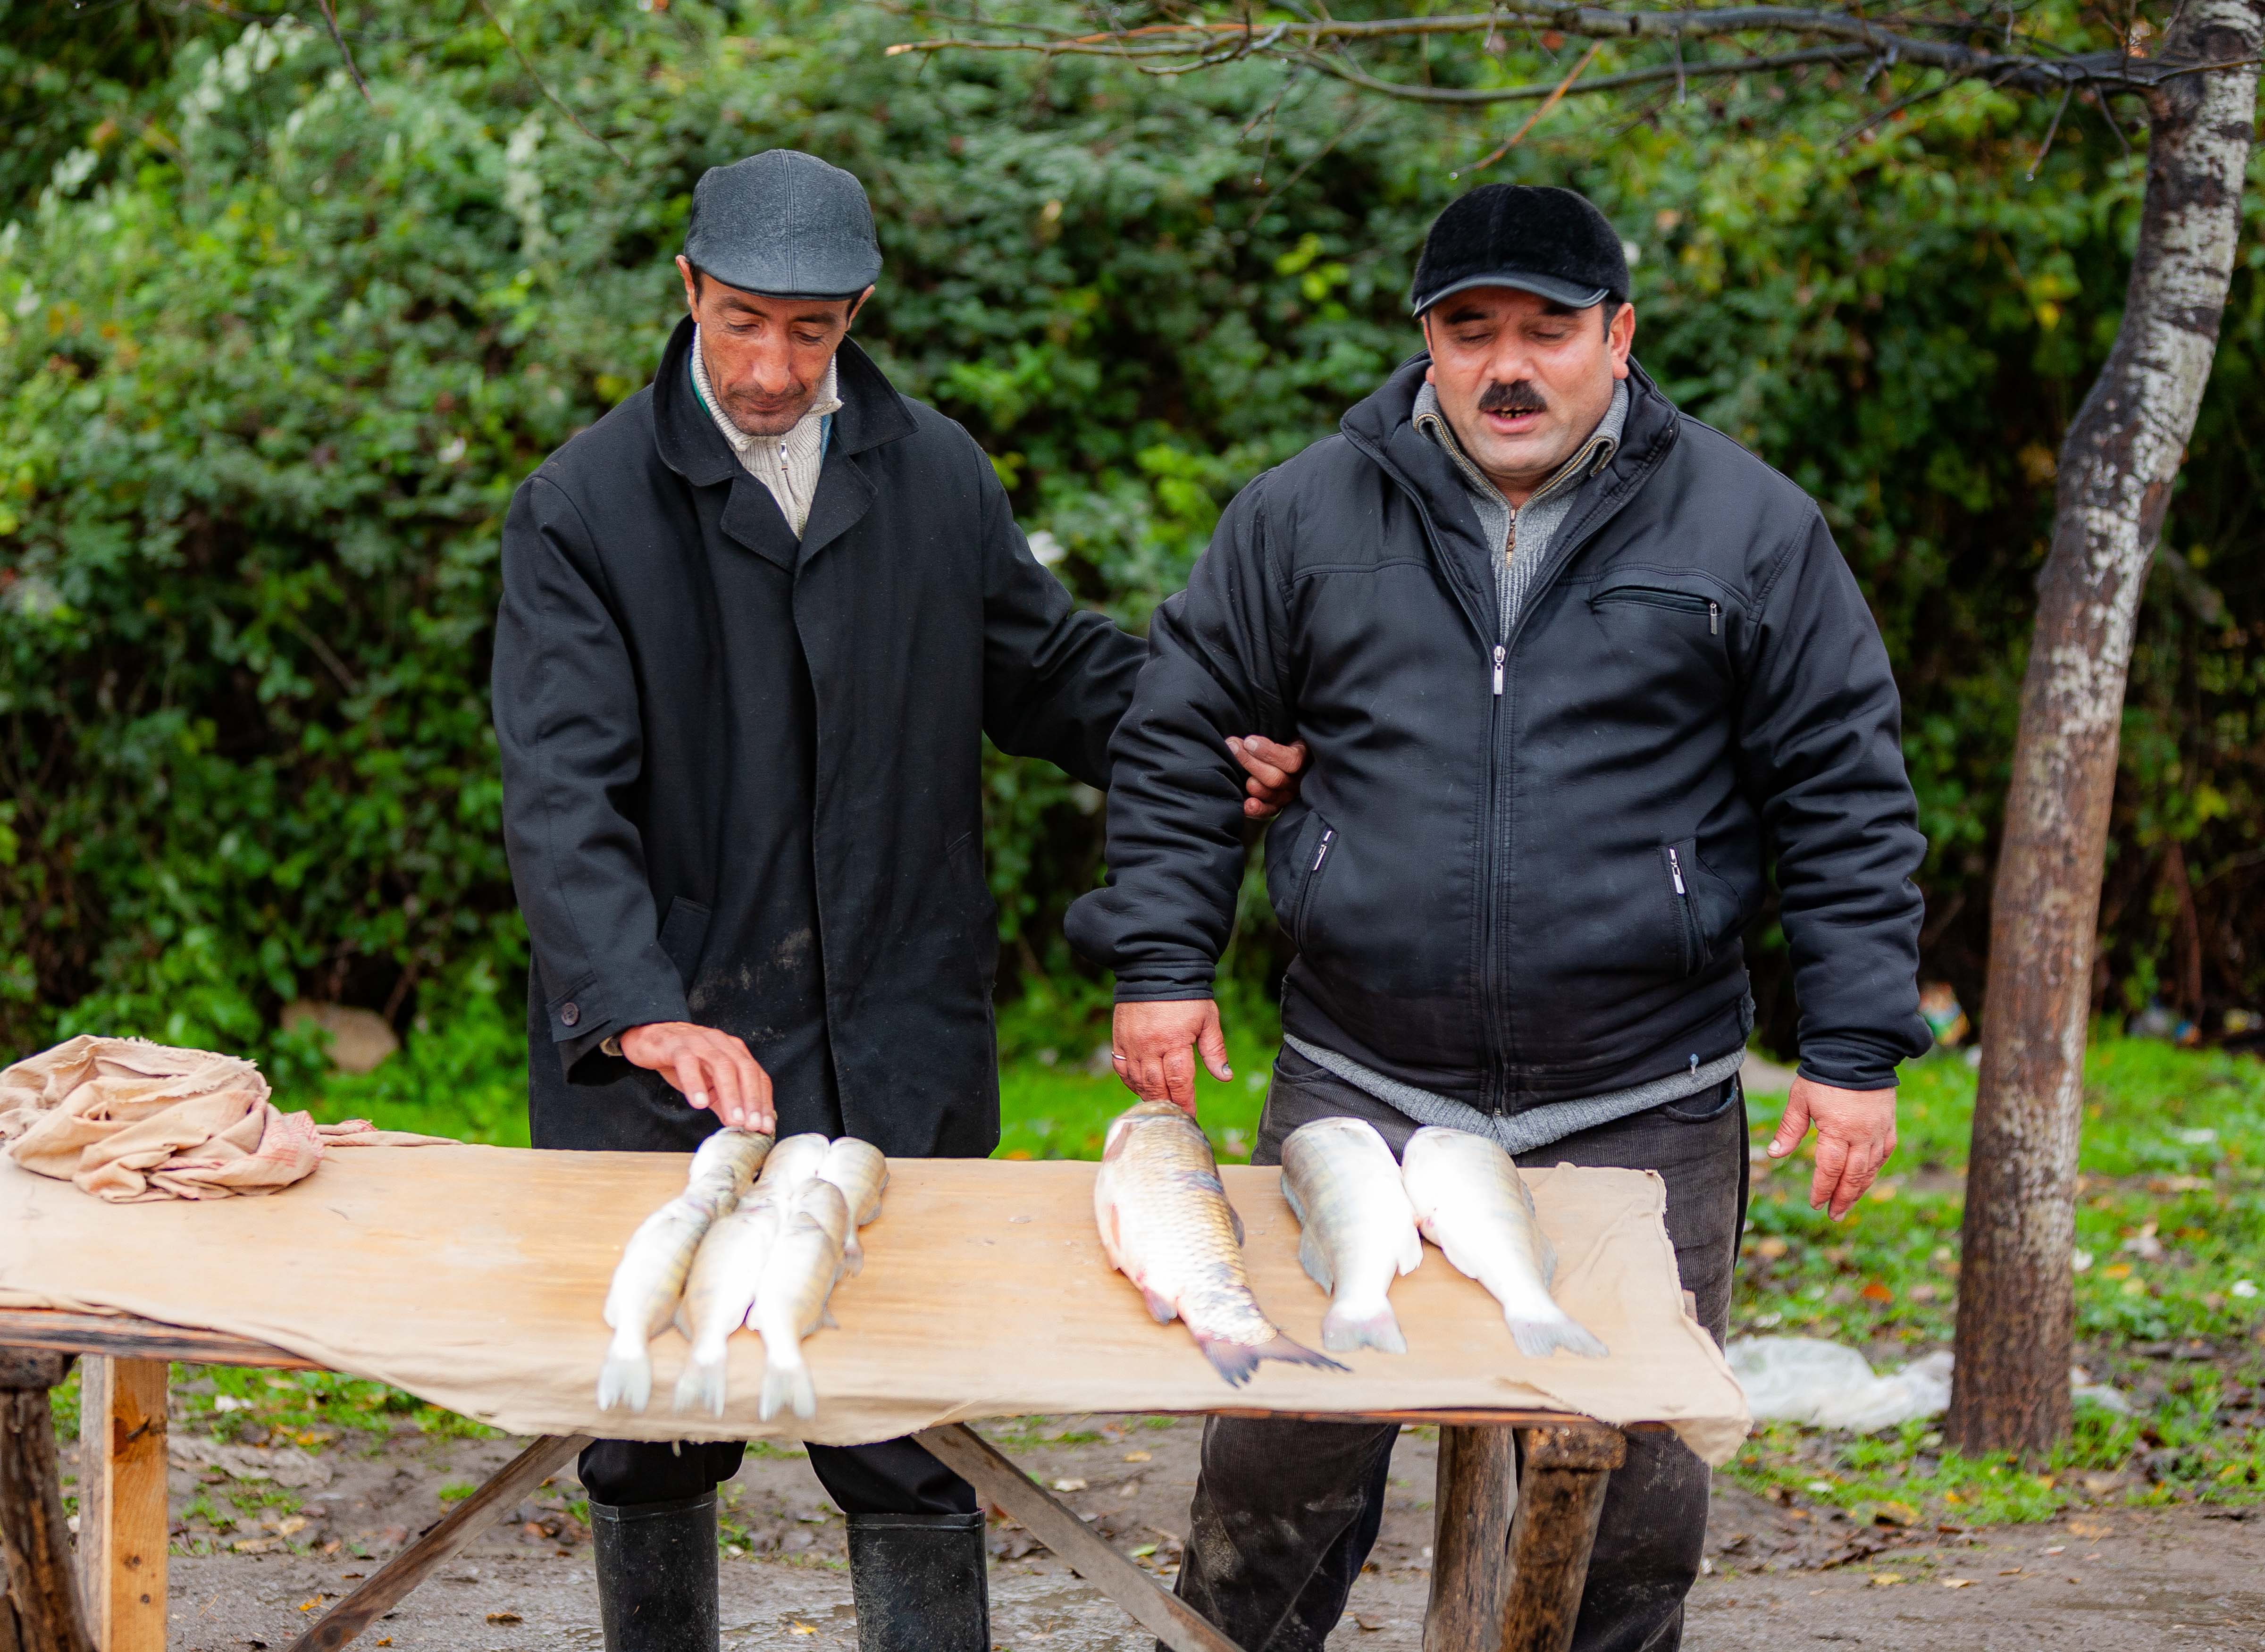 Azerbaijan, Shaki (SAK) Prov, Fish Vendors, 2009, IMG 8532